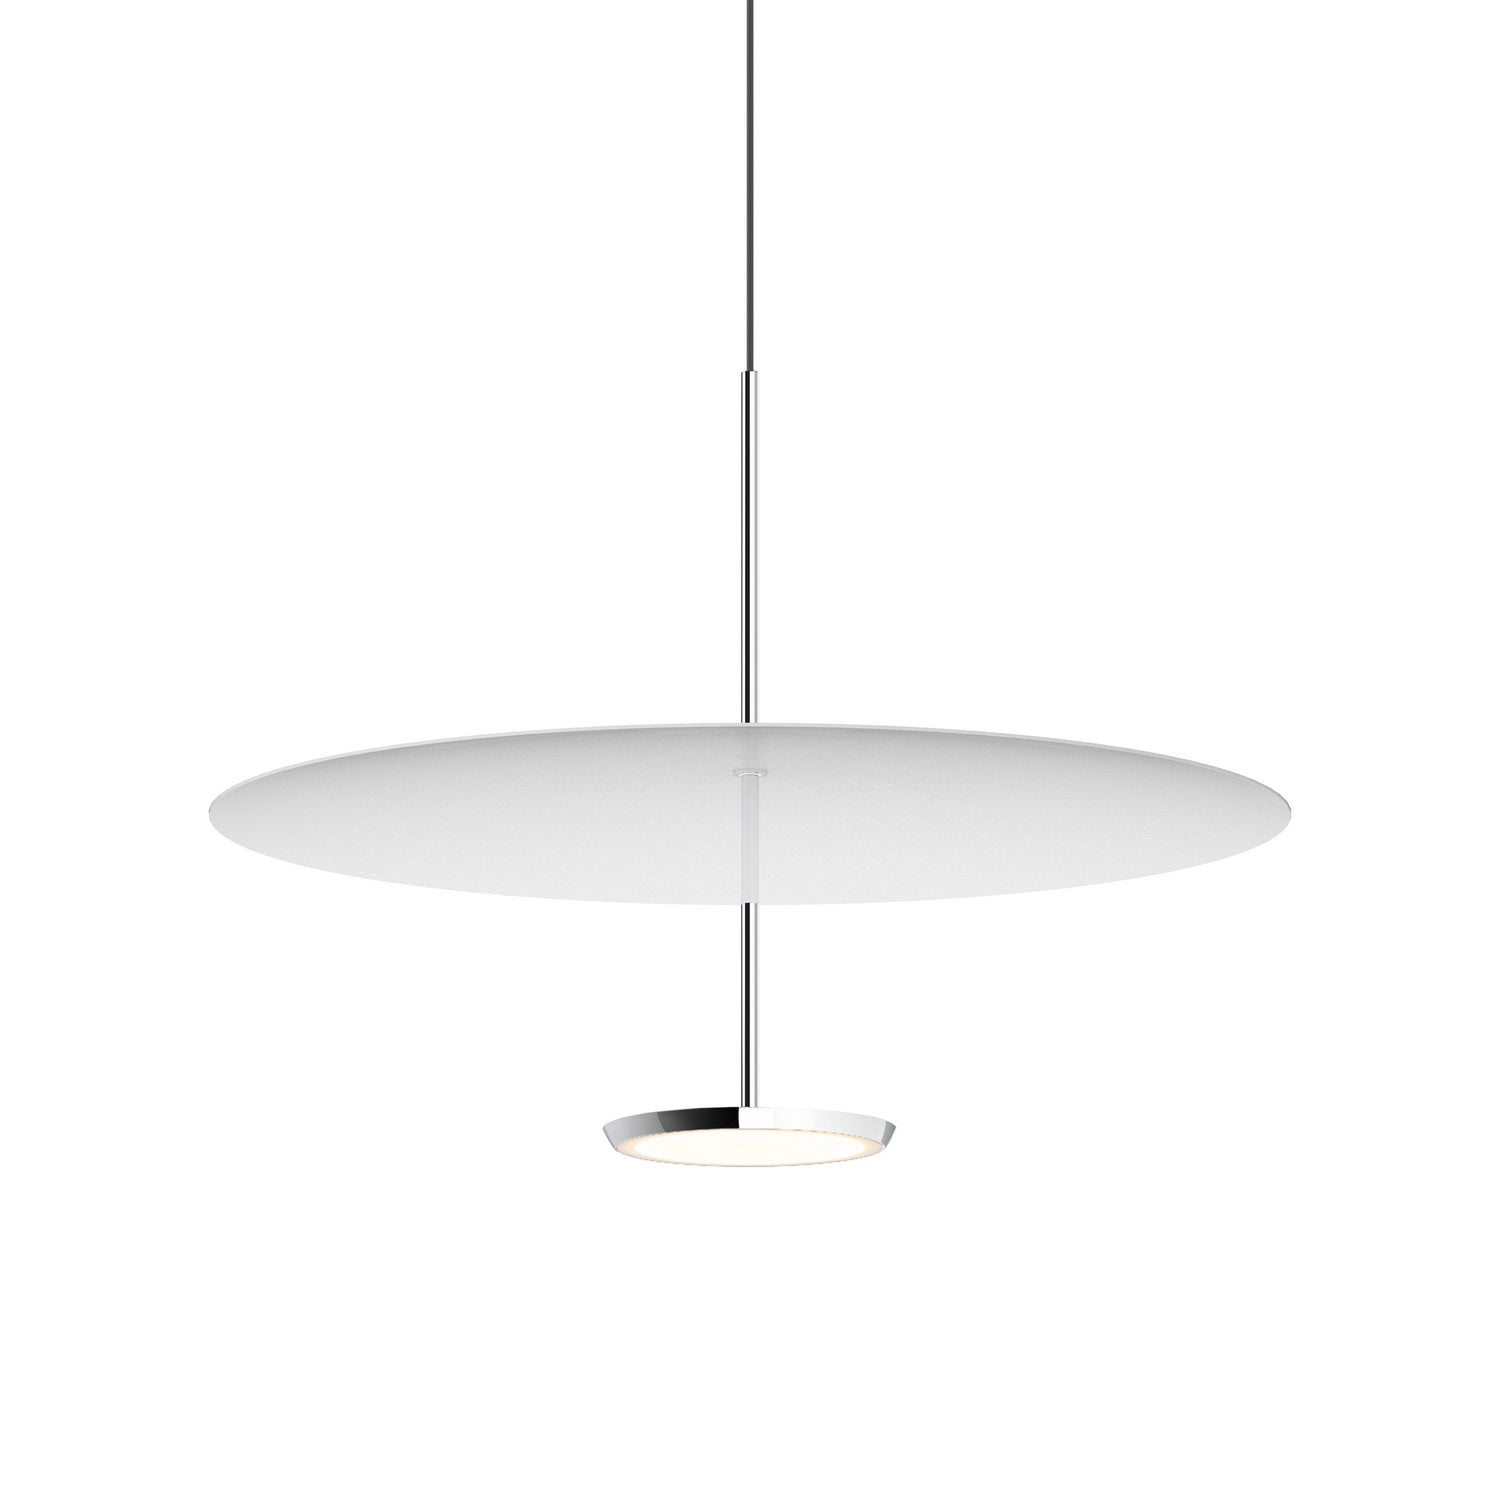 Pablo Designs - LED Pendant - Sky - White/Chrome- Union Lighting Luminaires Decor